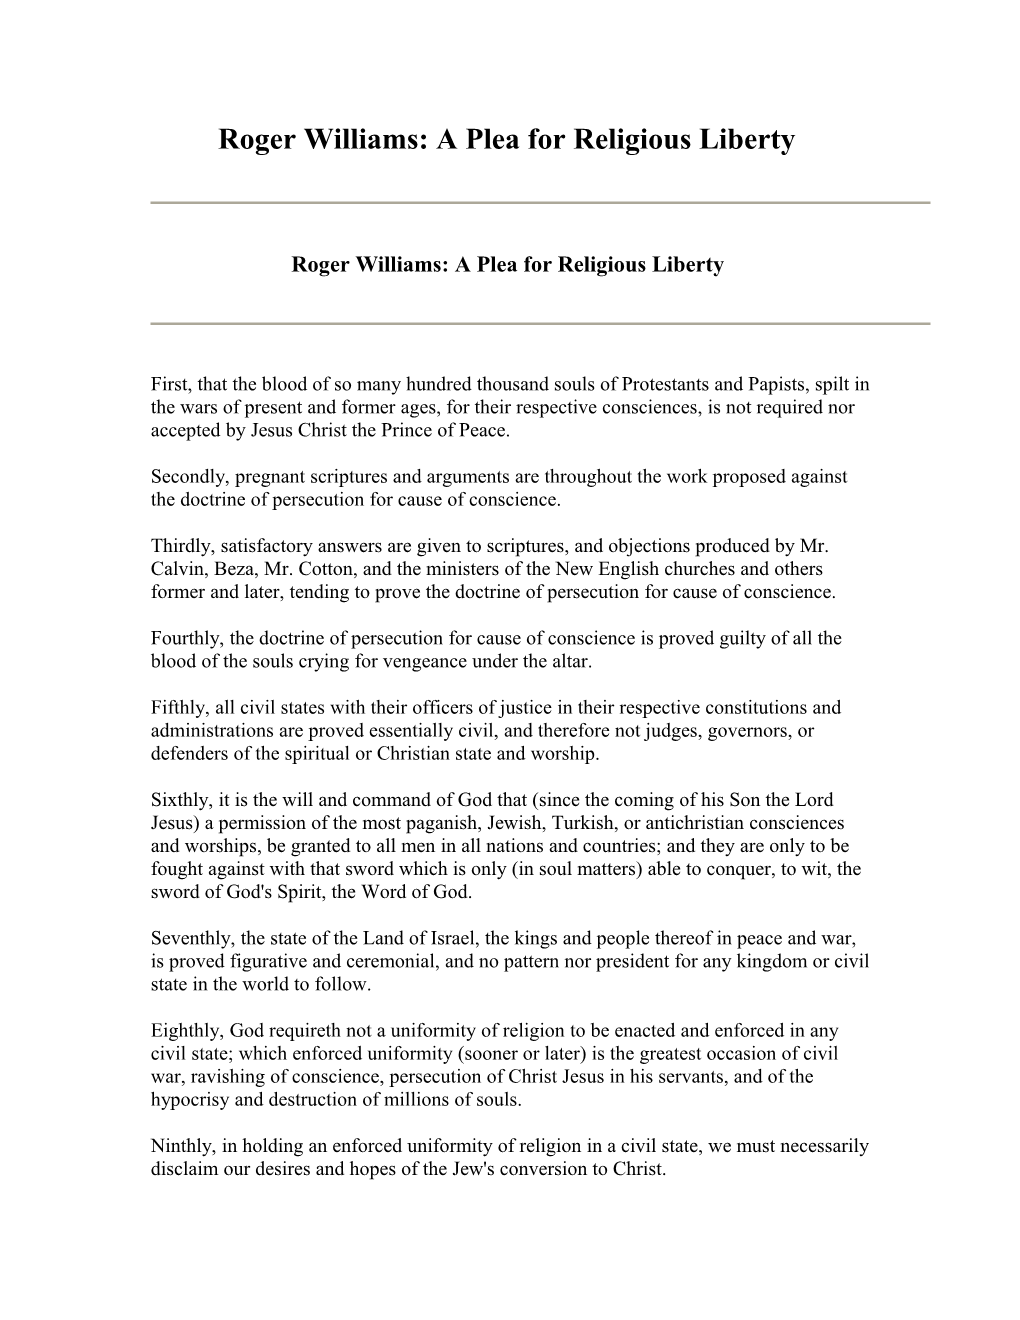 Roger Williams: a Plea for Religious Liberty